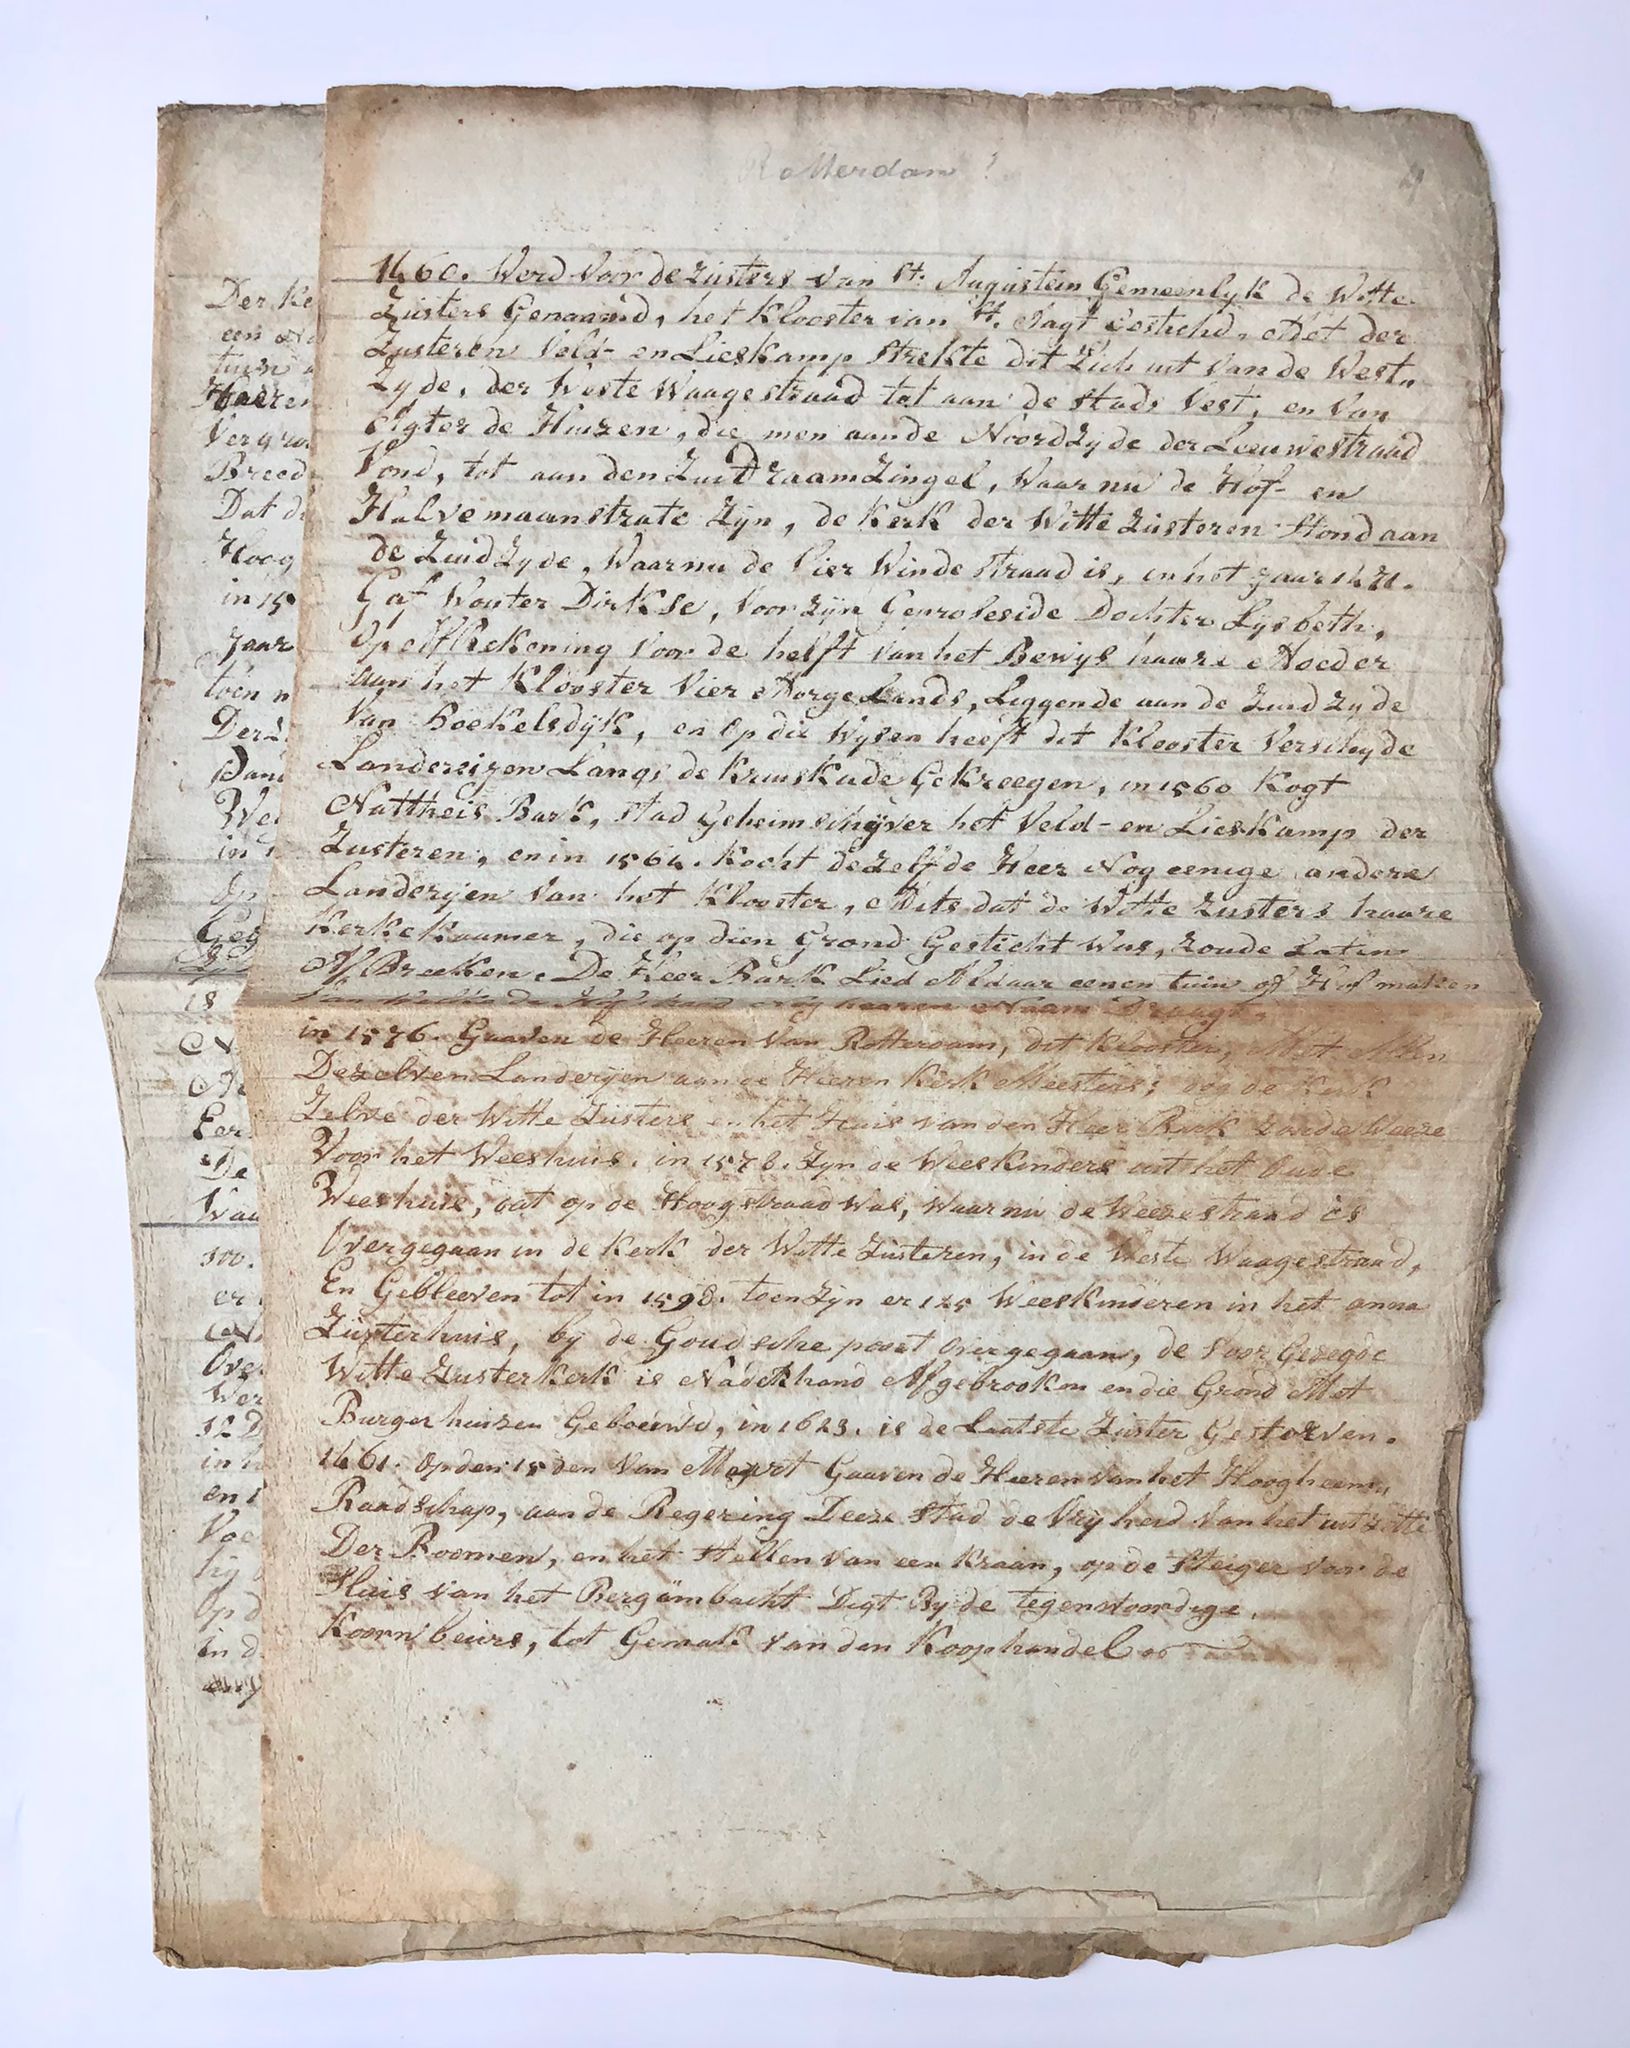  - [Manuscript, 18th century, Rotterdam] 18e eeuwse aantekeningen over kerken te Rotterdam in de 15e eeuw, manuscript, folio, 8 pag.